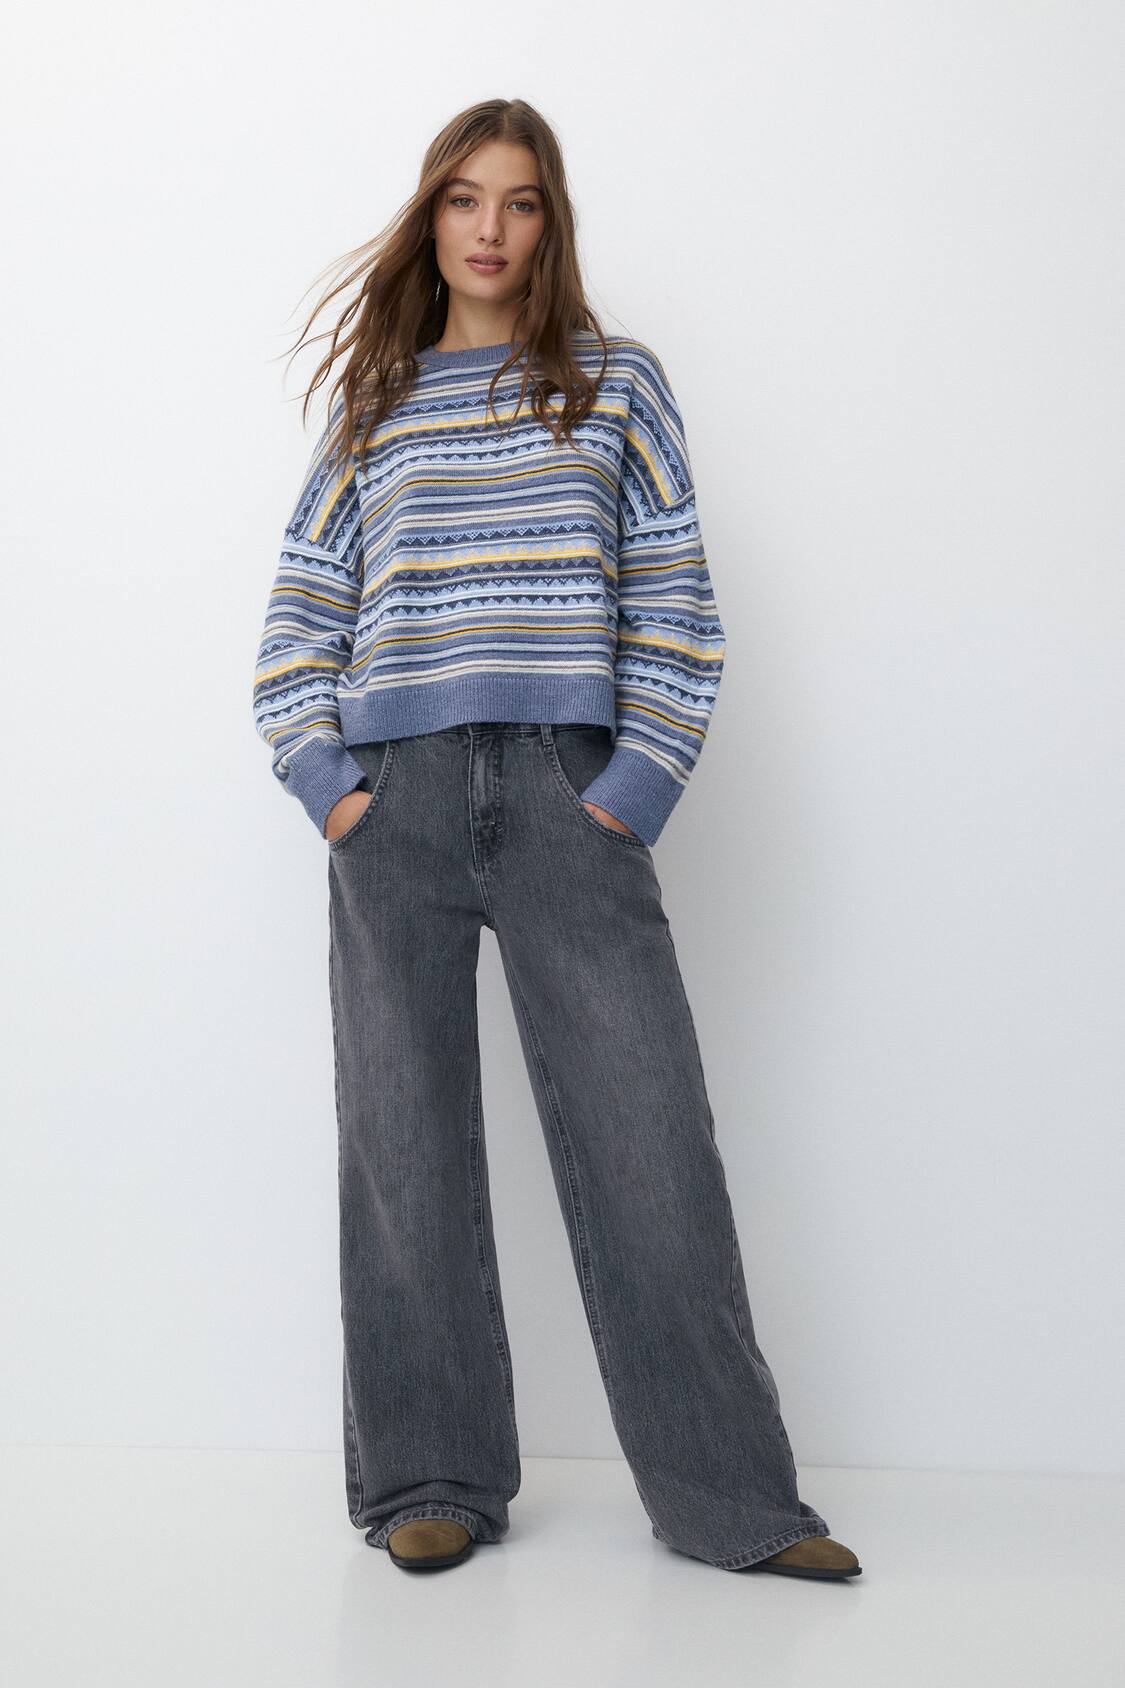 Zara - Jacquard Knit Sweater - Sand Blue - Unisex